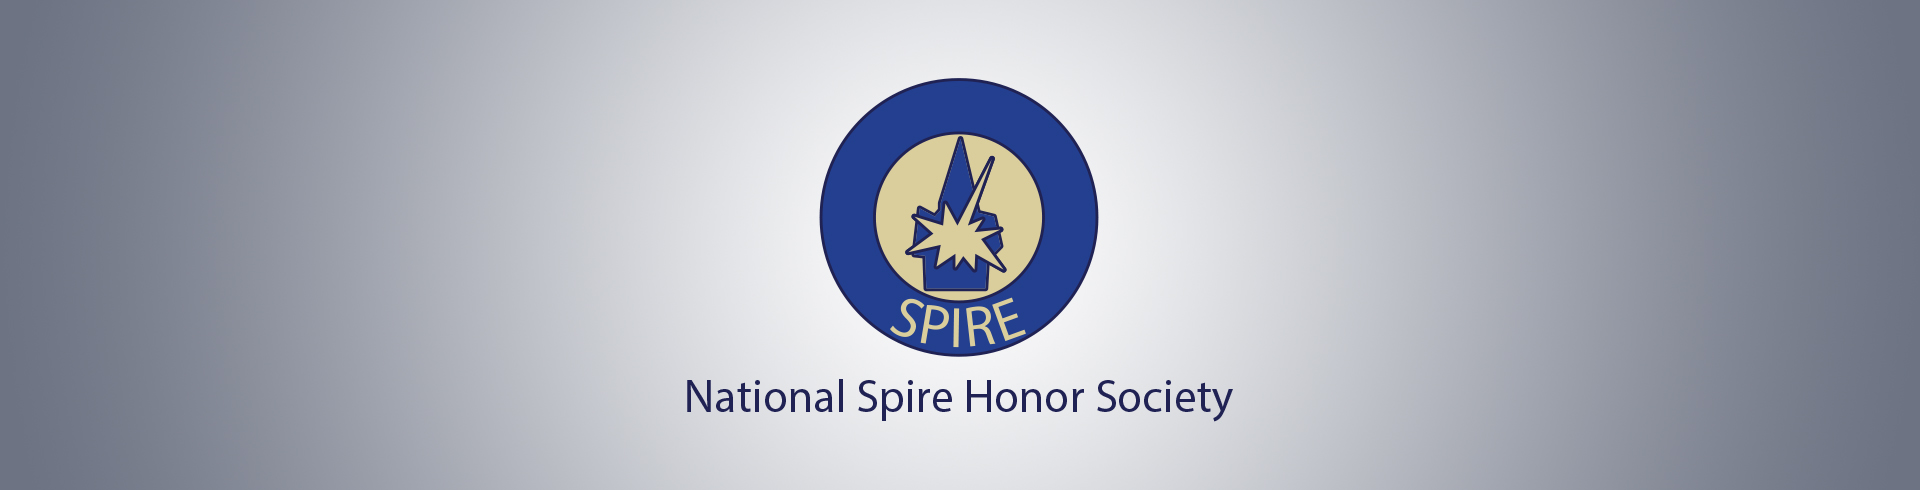 National Spire Honor Society